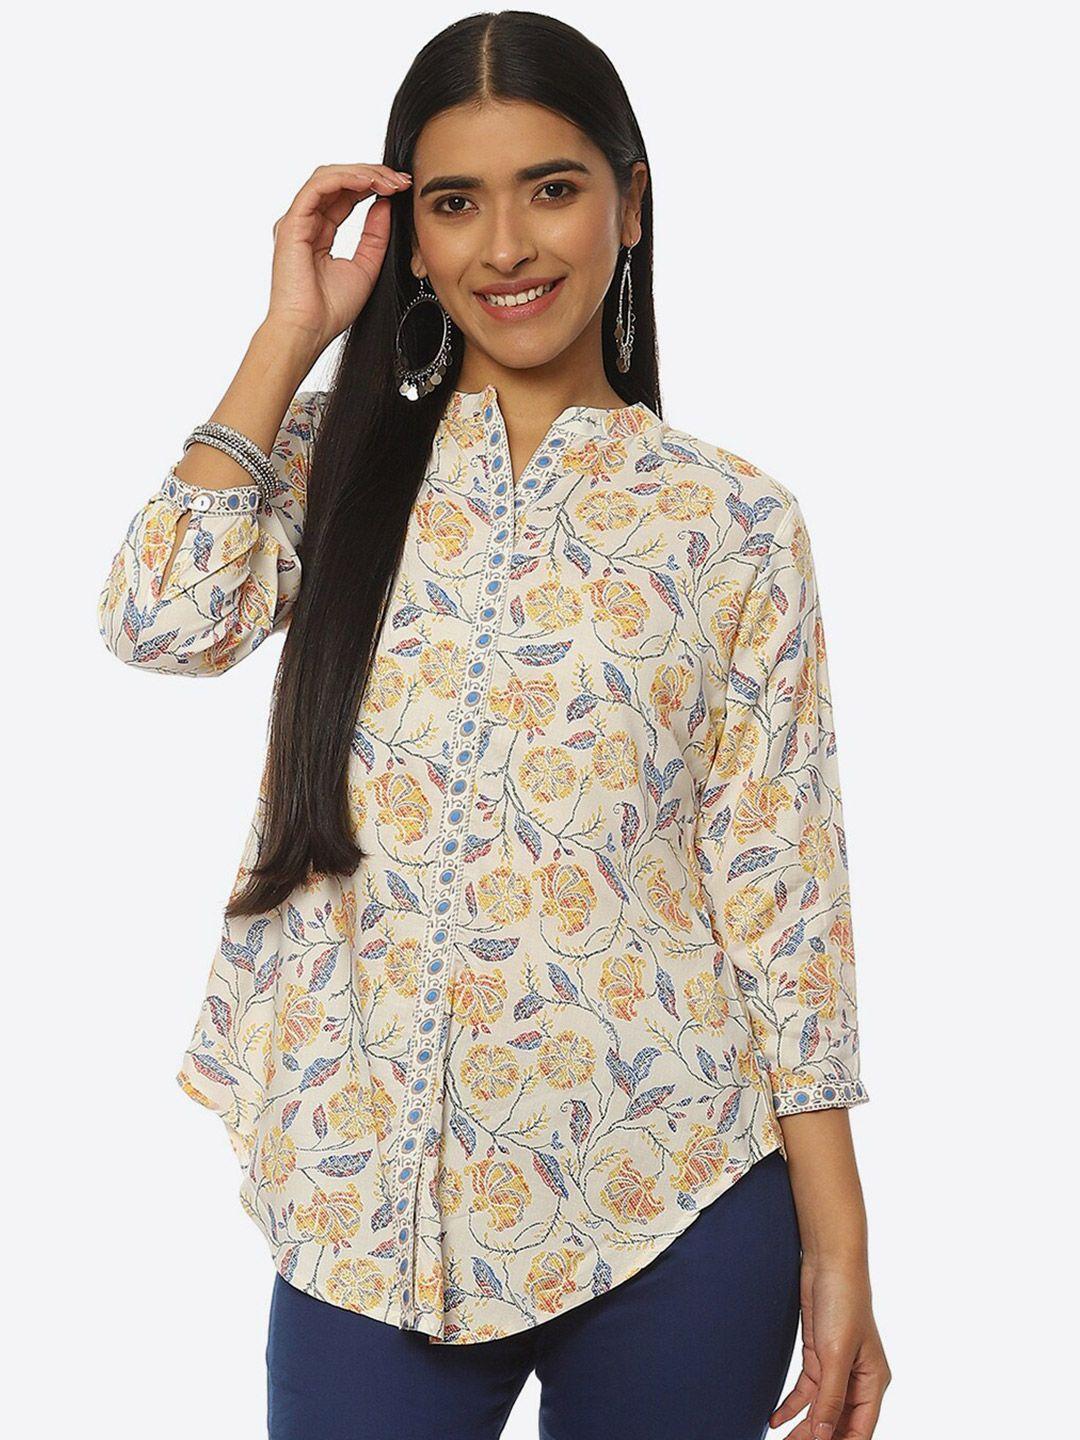 rangriti-floral-print-shirt-style-top